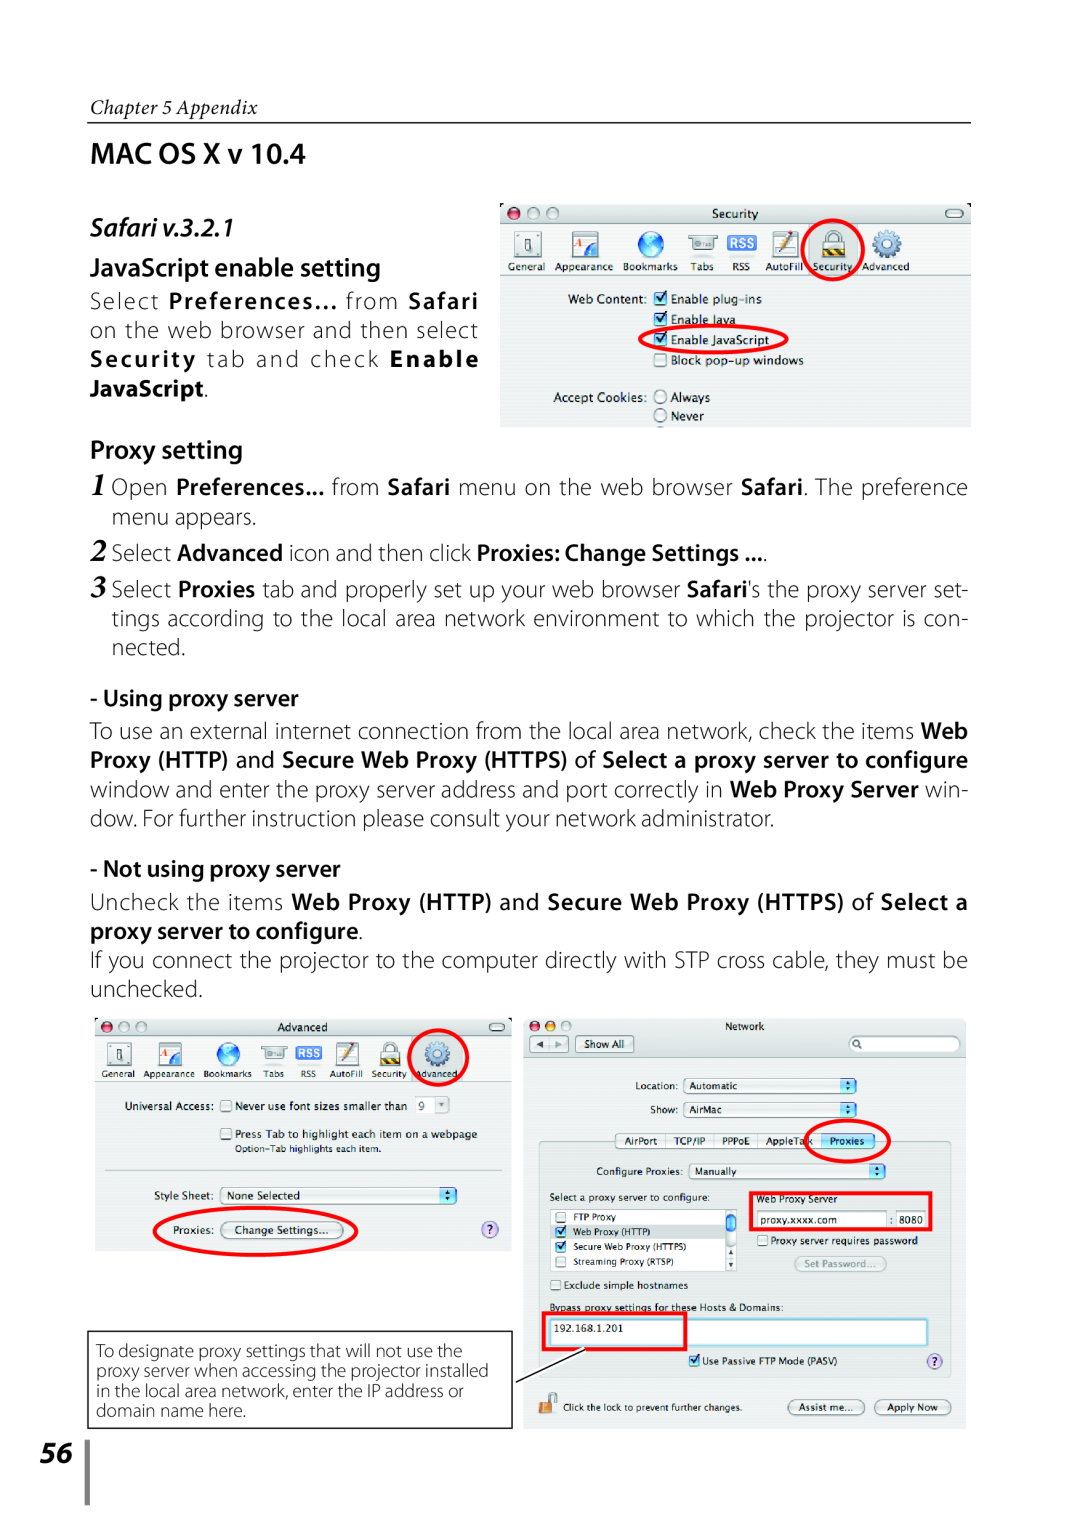 Sanyo Projector Mac Os, Safari, JavaScript enable setting, Select Advanced icon and then click Proxies Change Settings 